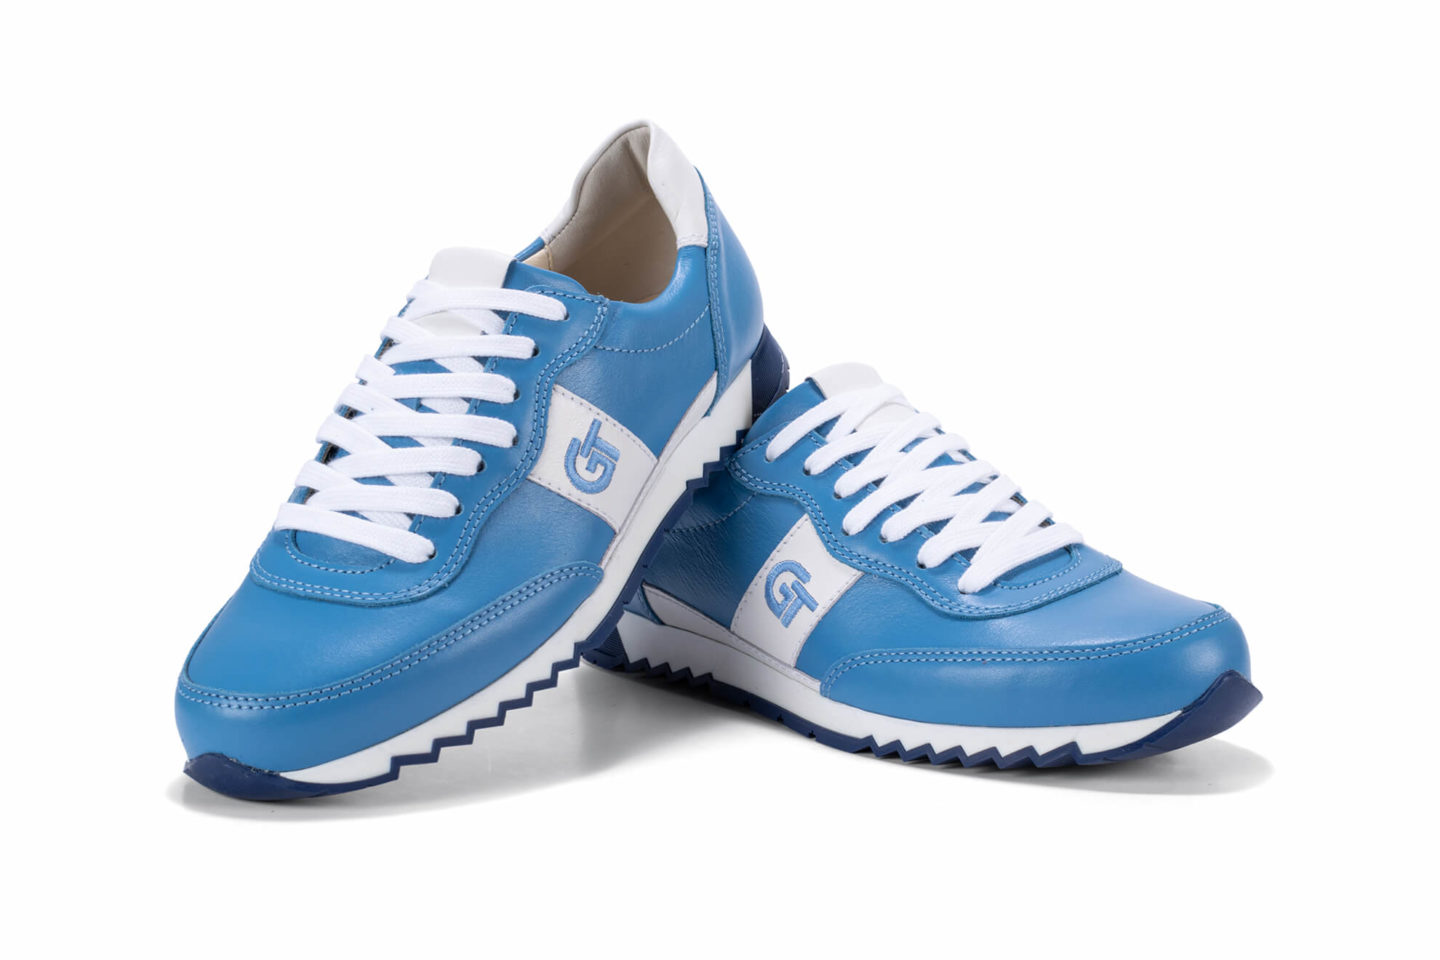 G&T Aktív Kék - Fehér bőr sportcipő